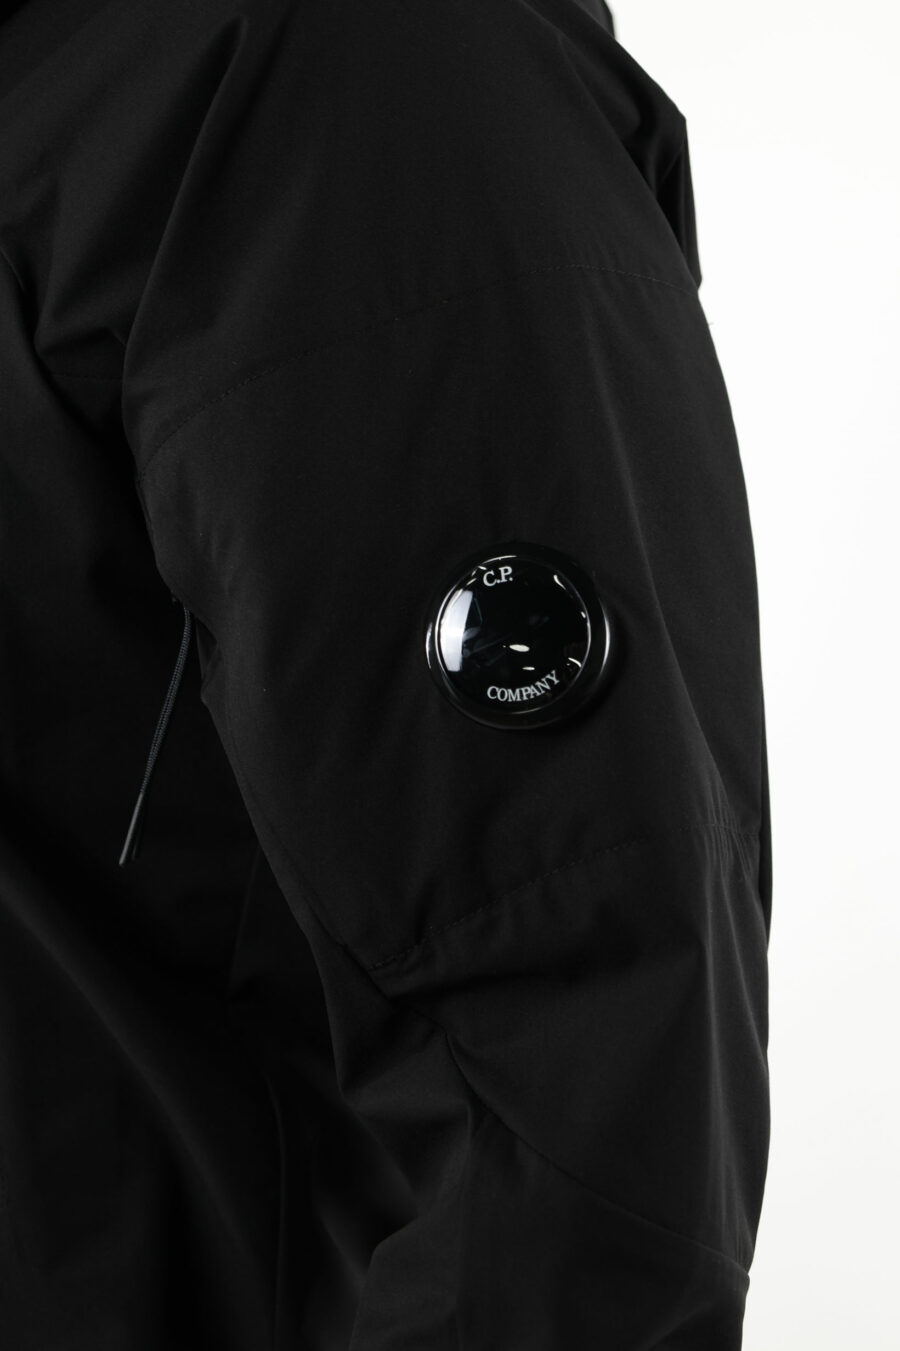 Schwarze Jacke mit Kapuze und Minilogue-Objektiv - 111417